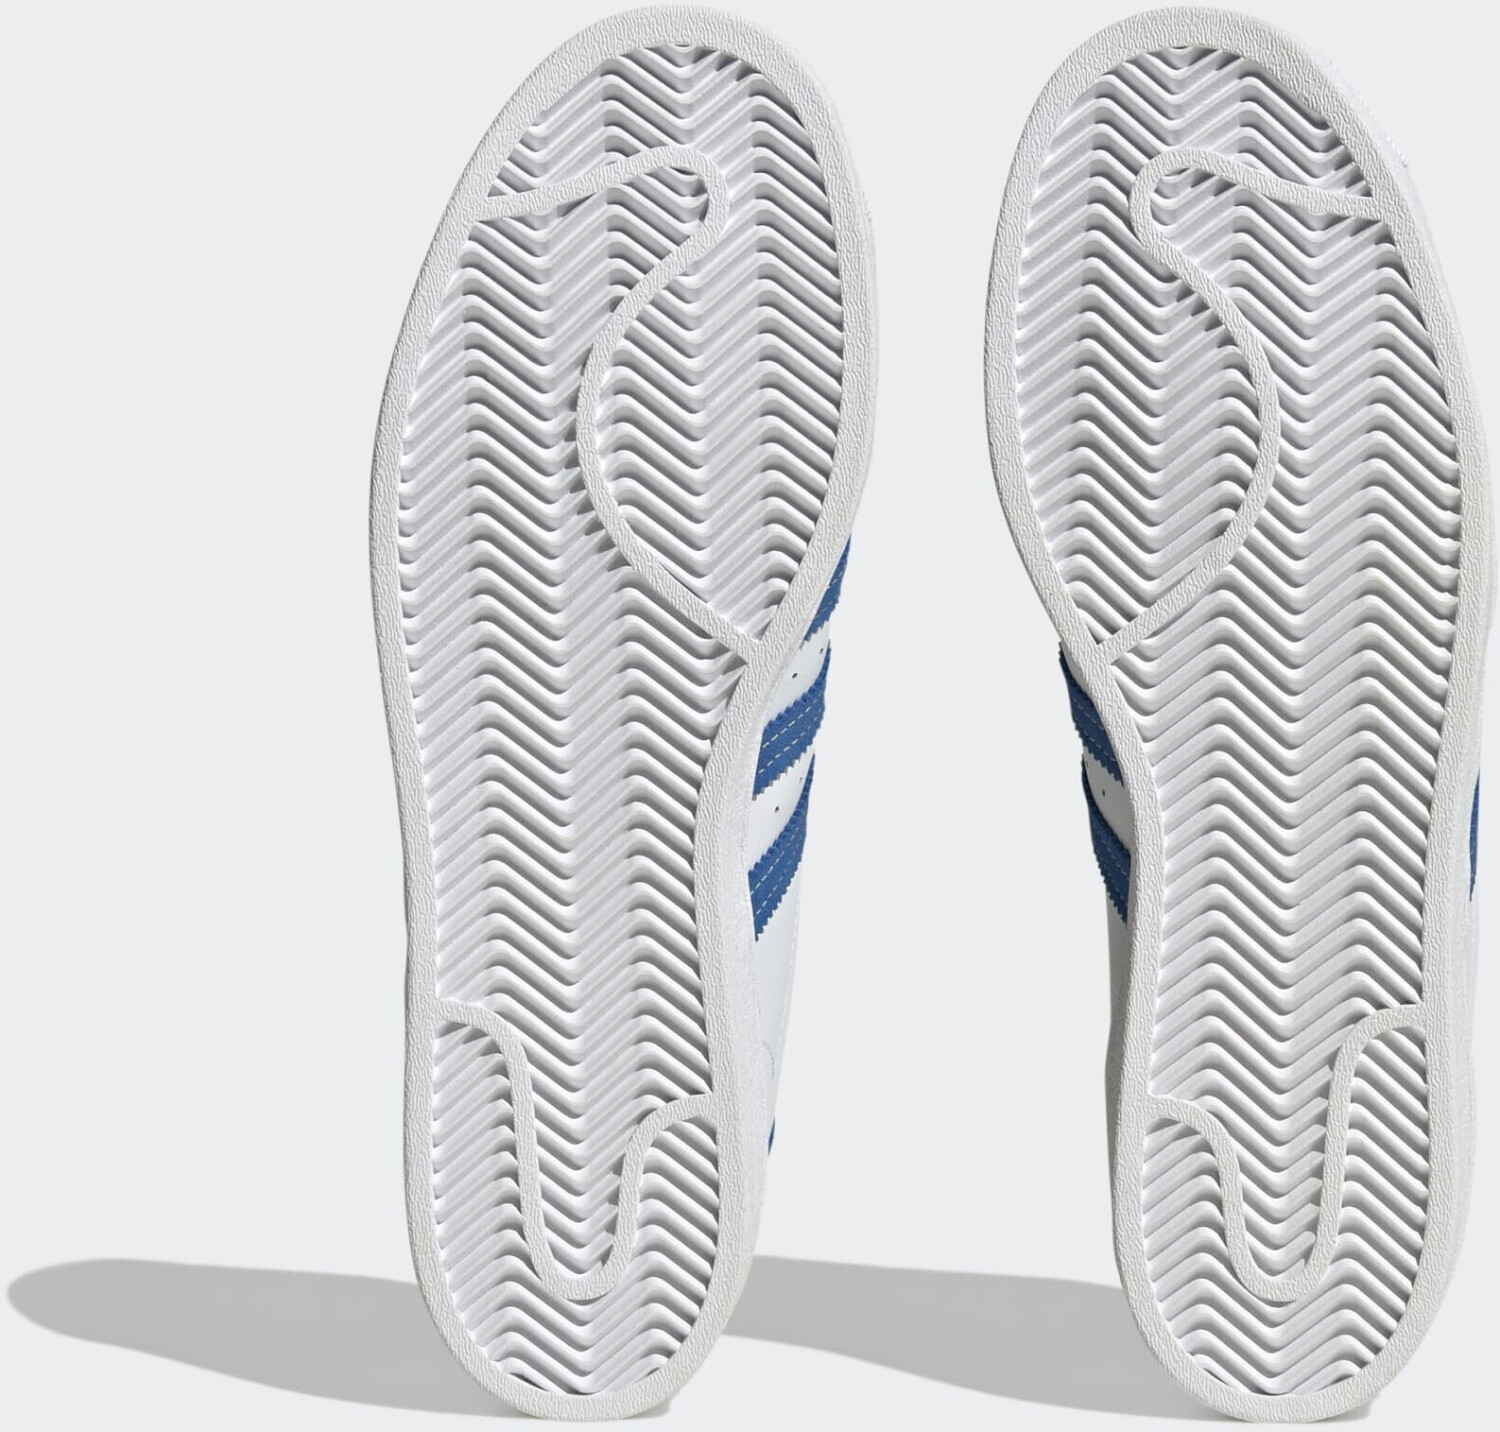 Adidas Superstar cloud white/sand strata/bright 77,59 bei ab royal | € Preisvergleich